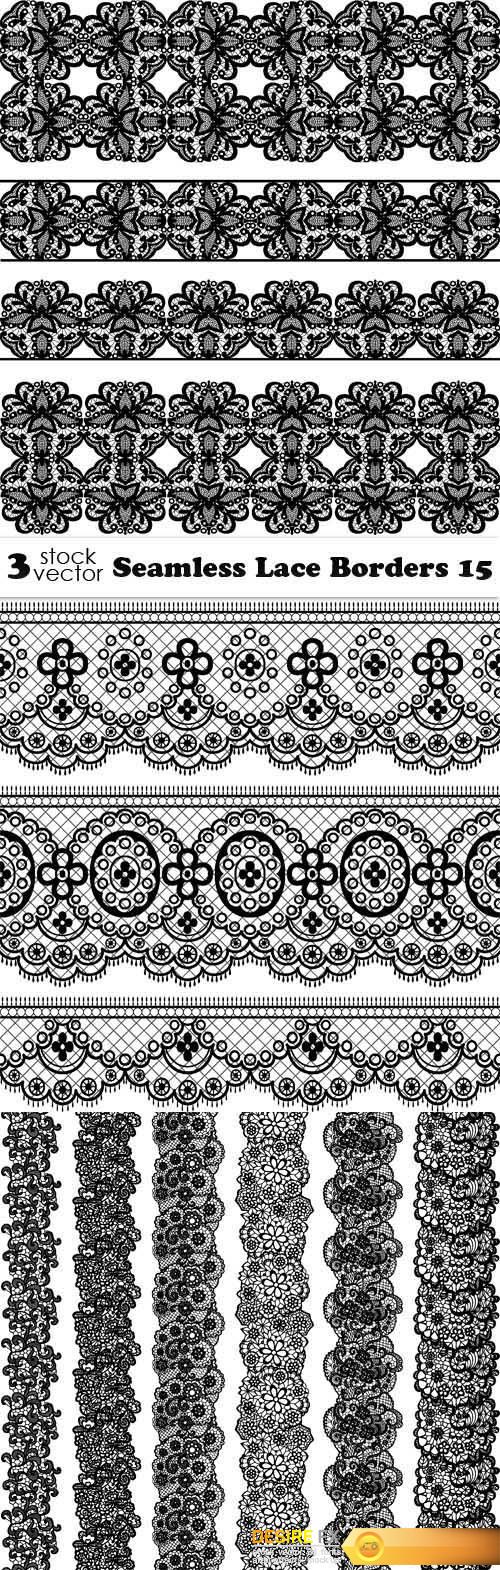 Vectors - Seamless Lace Borders 15